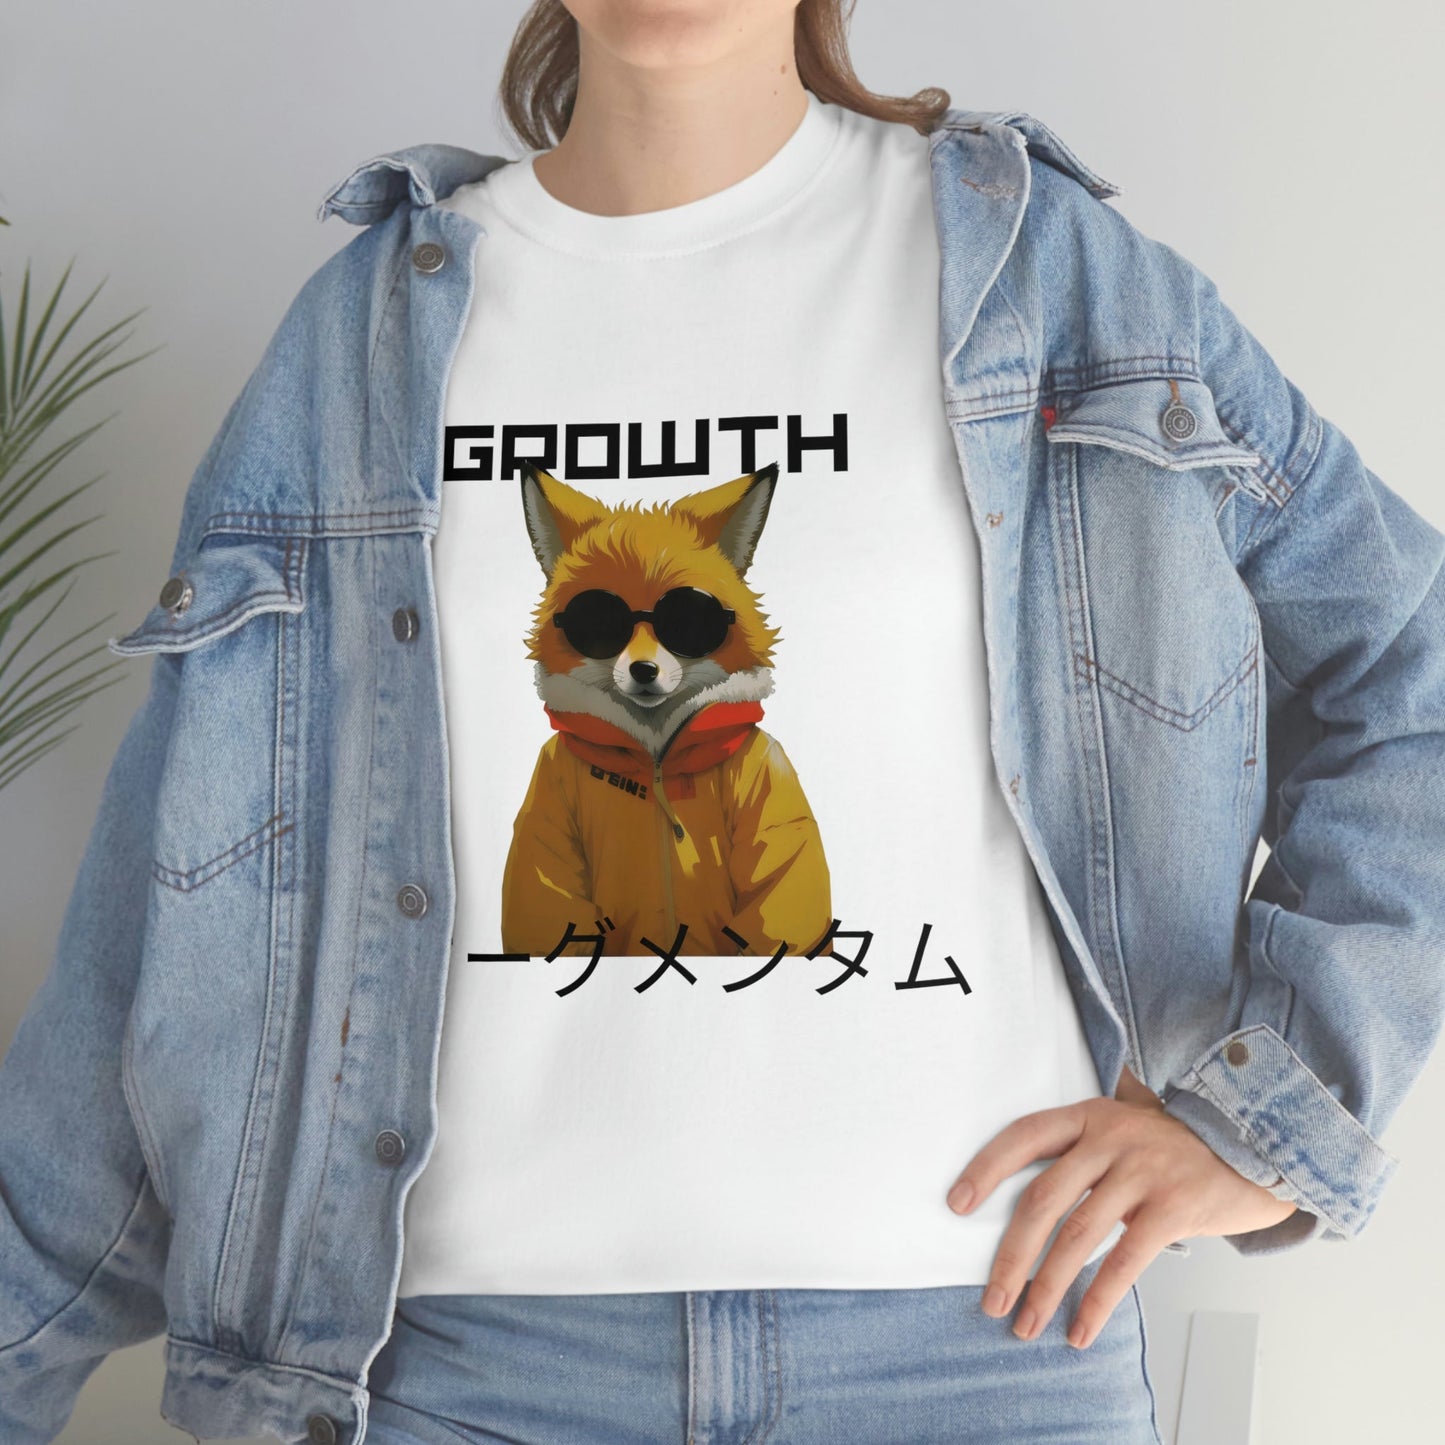 T-Shirt | Growth Anime Shirt, Anime Aesthetic Shirt, Vintage Anime Shirt, Anime Girl Shirt, kawaii shirt, Fox Shirt | Moikas Lookout - Moikas